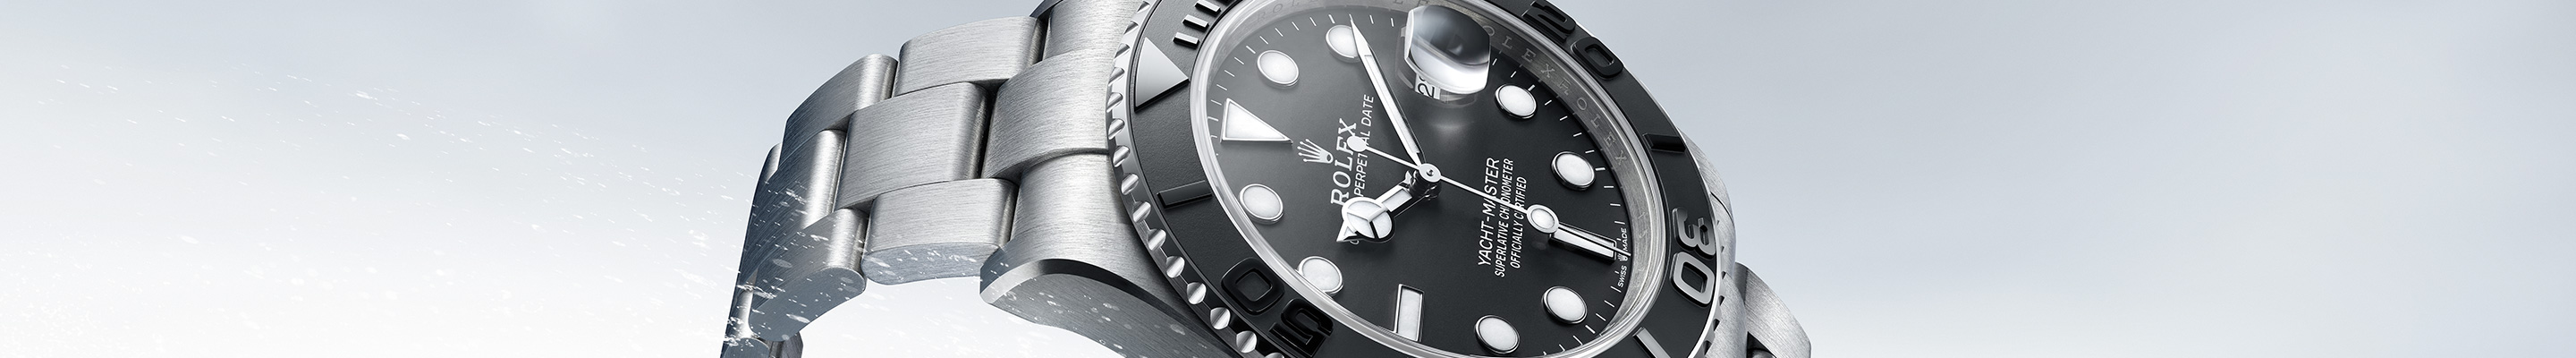 Rolex Watches at Juwelier Wagner